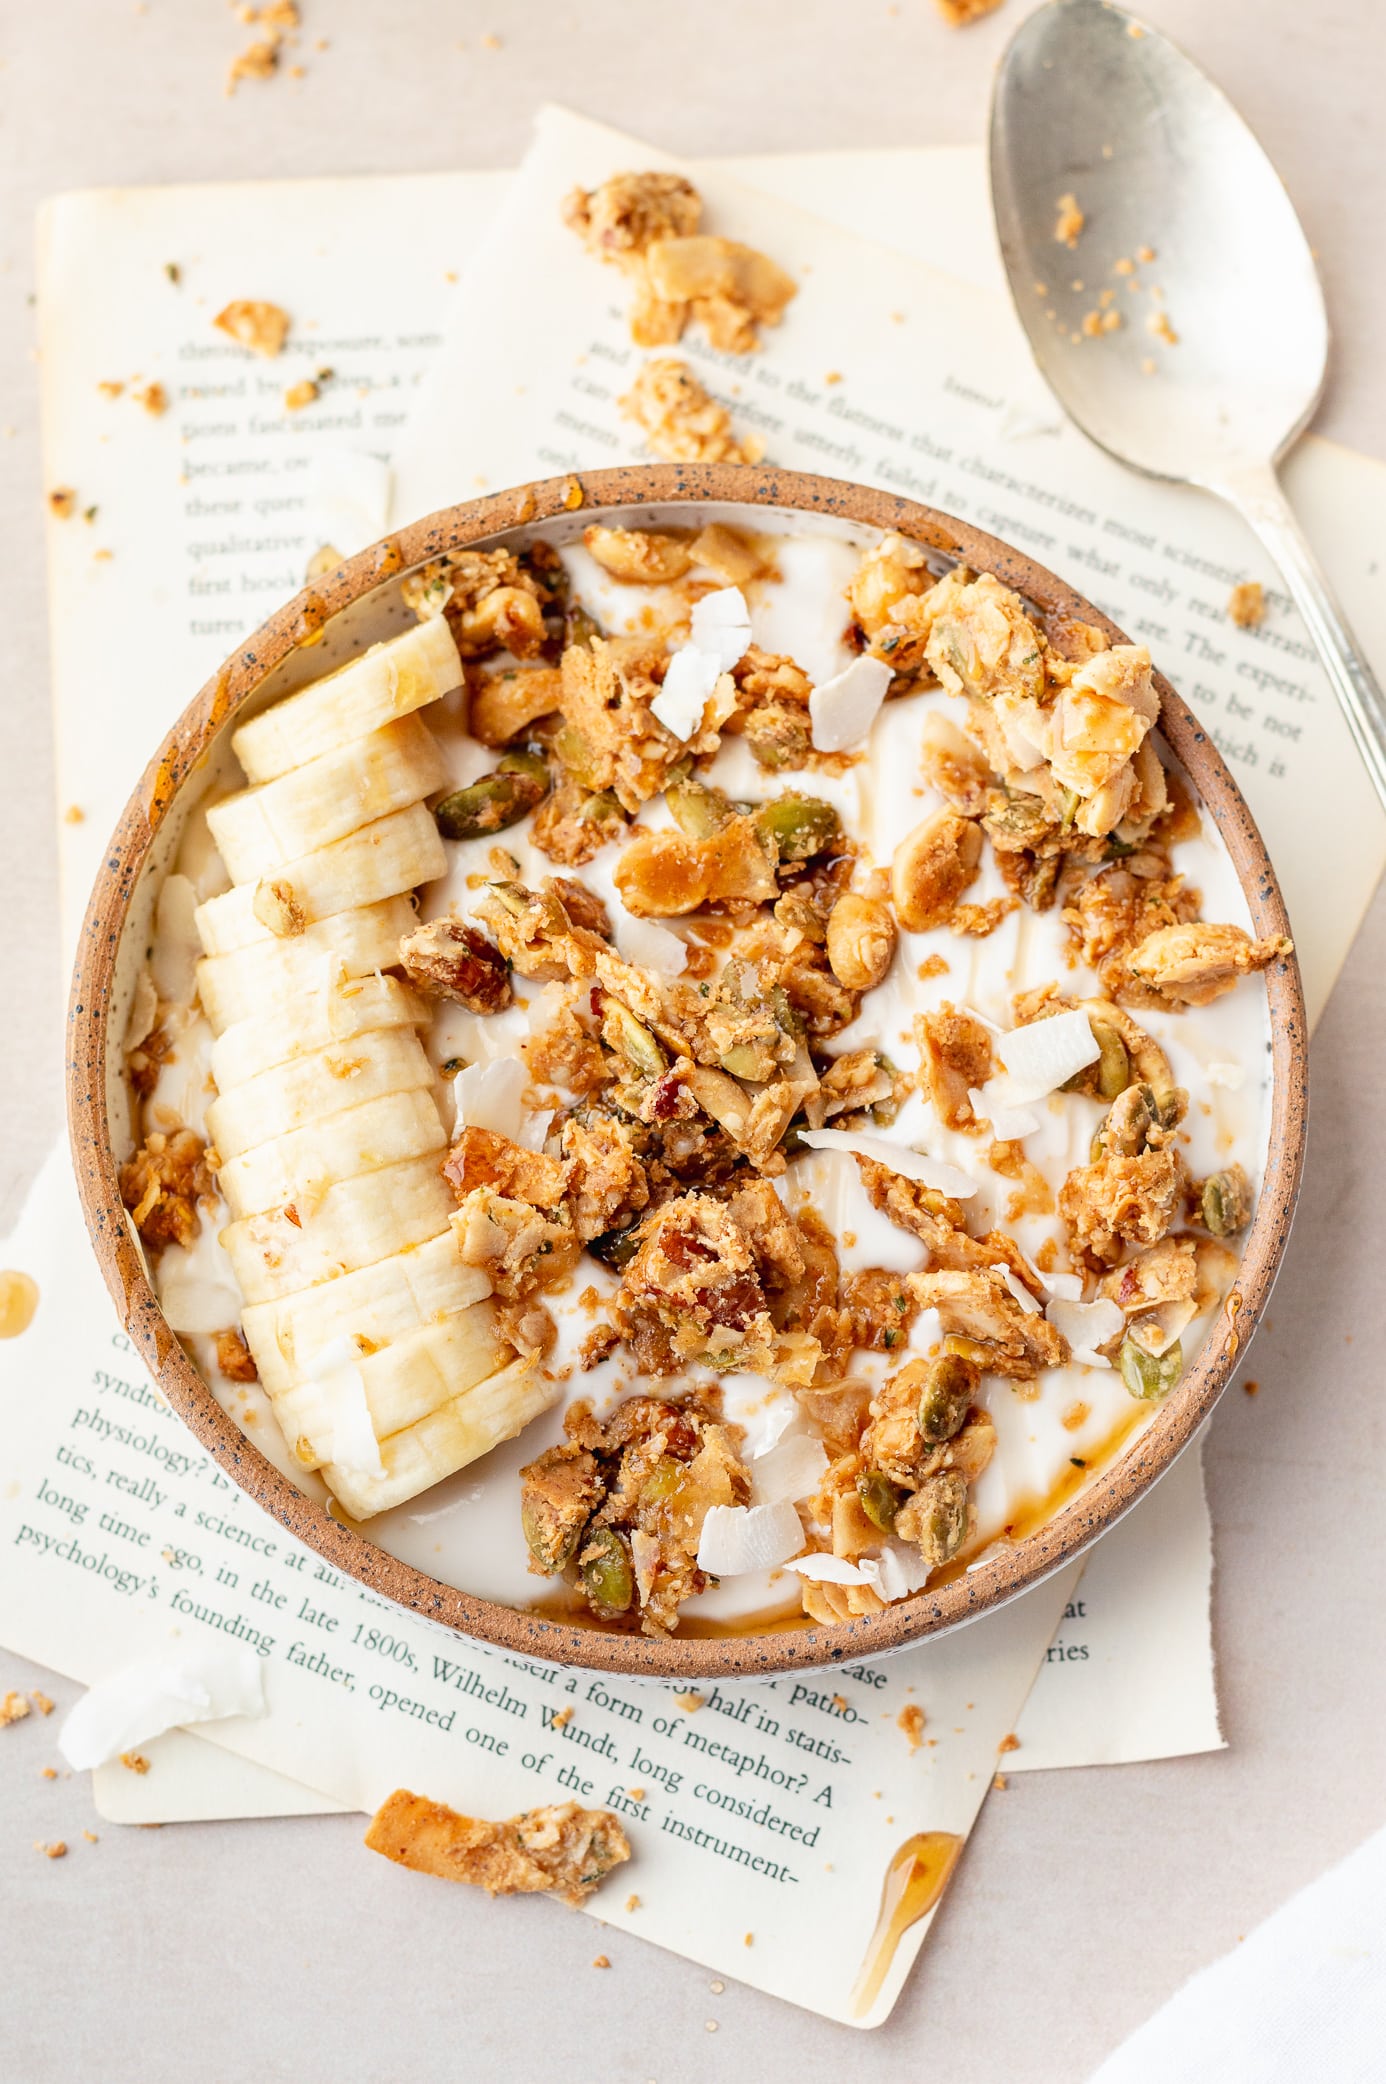 coconut peanut butter granola with sliced banana and yogurt